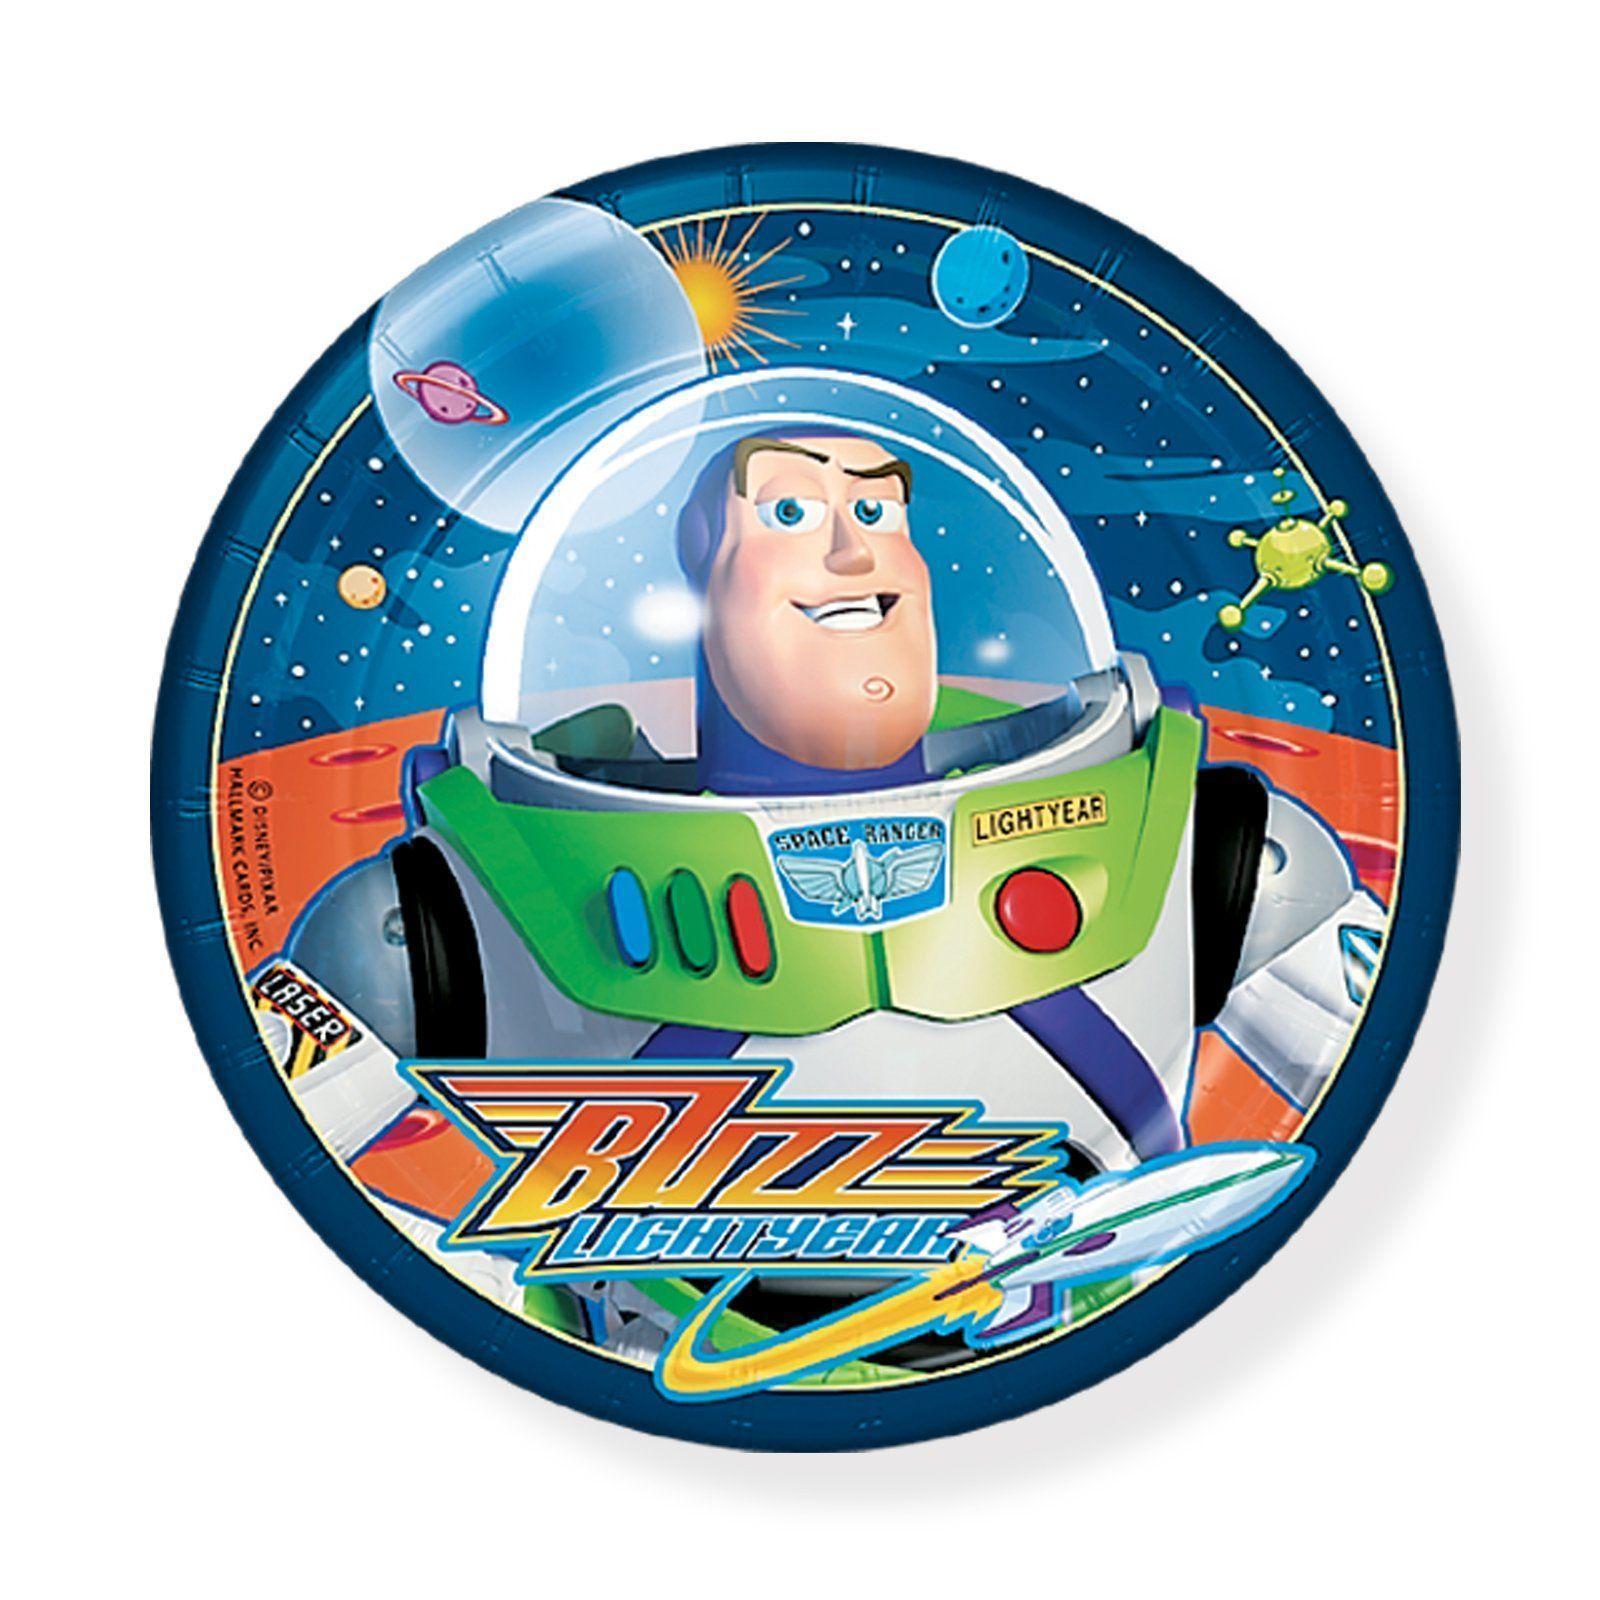 Buzz Lightyear plate picture, Buzz Lightyear plate image, Buzz